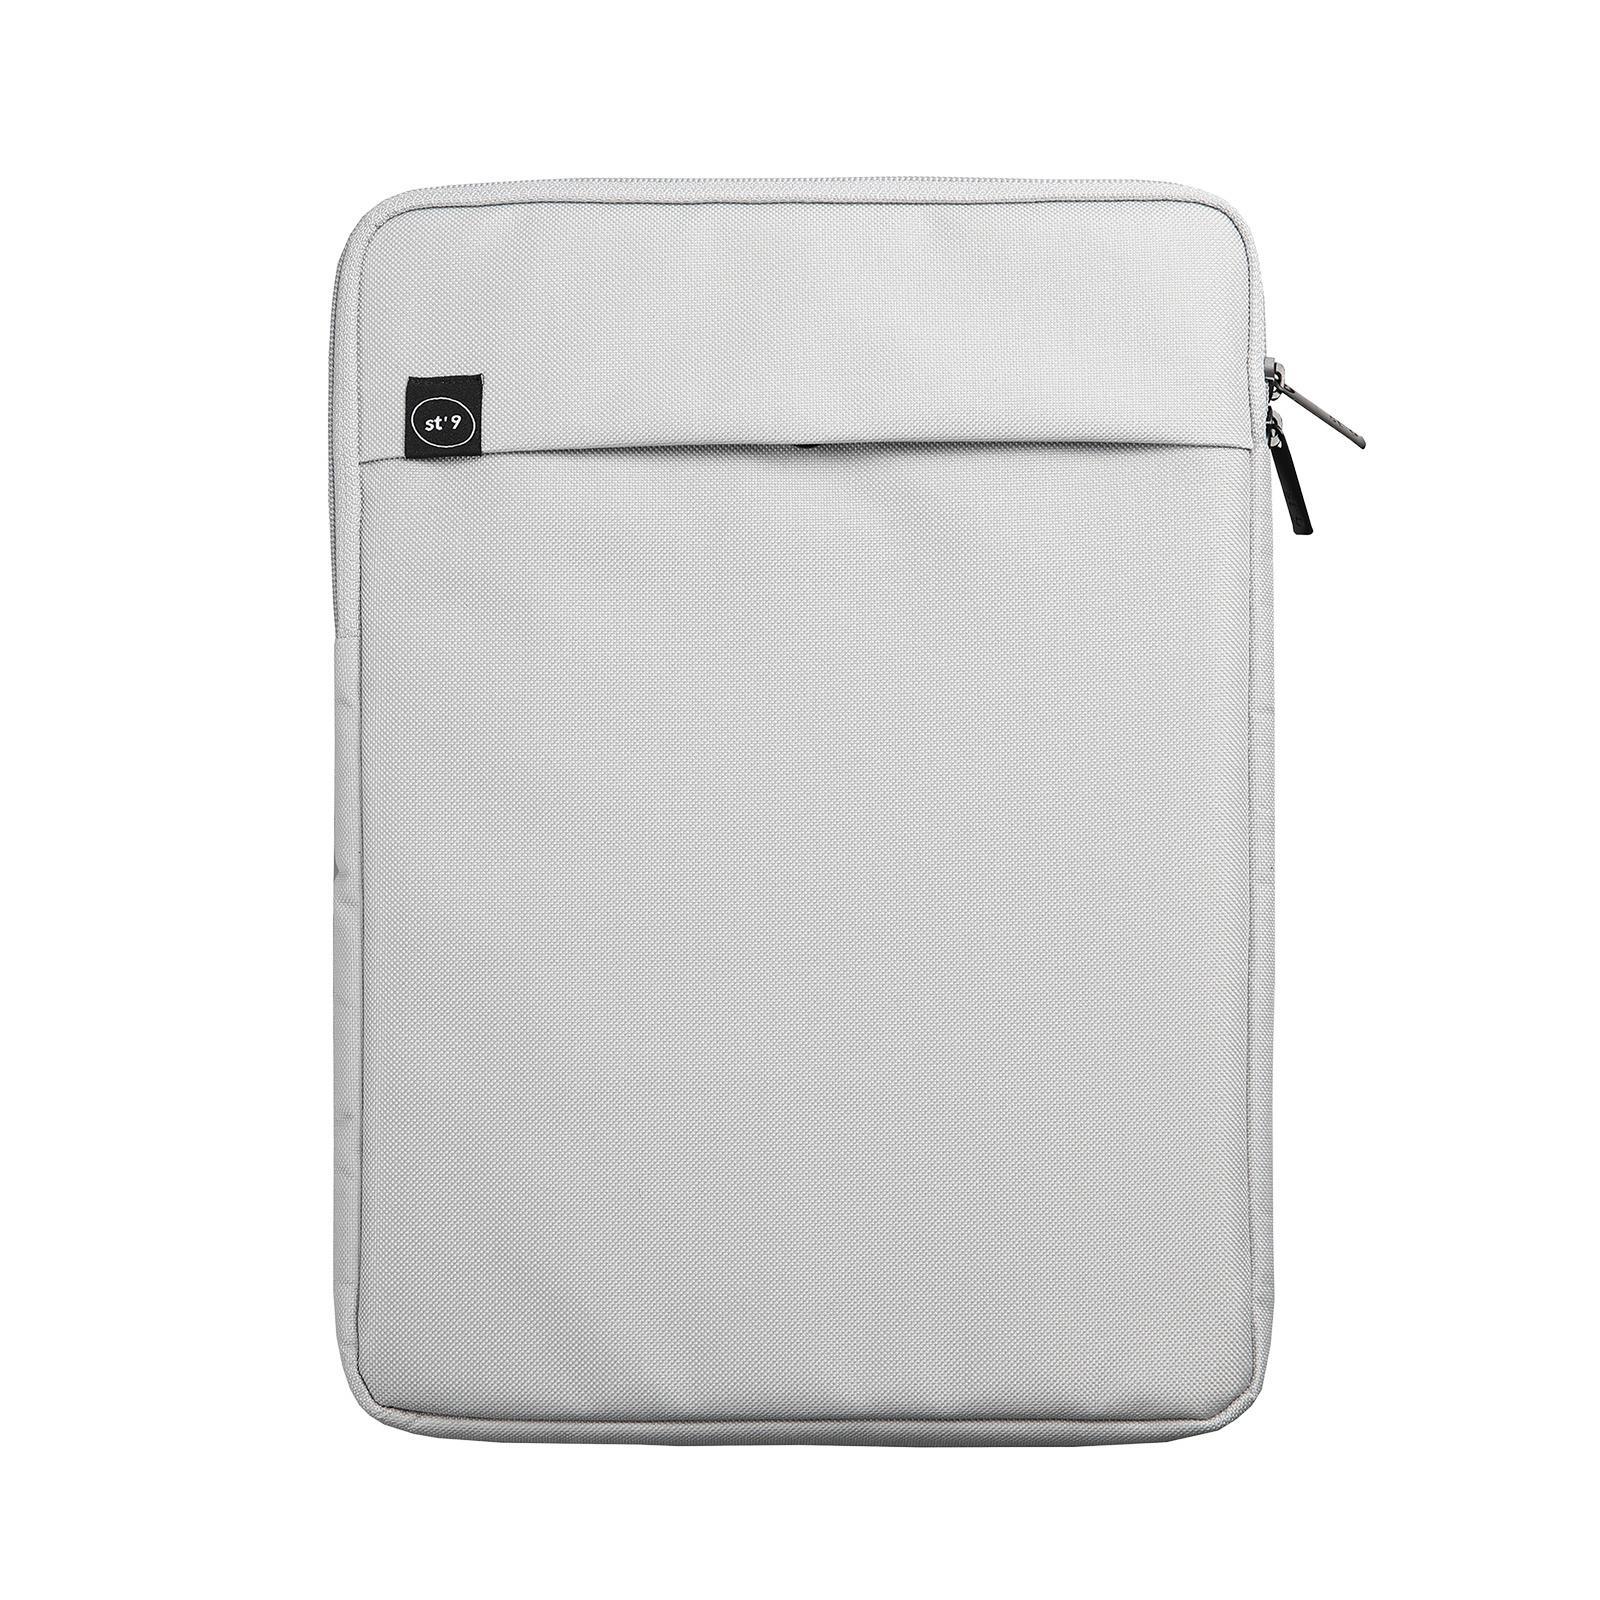 ST9 M size 13 inch Grey Laptop Sleeve Padded Travel Carry Case Bag LUKE